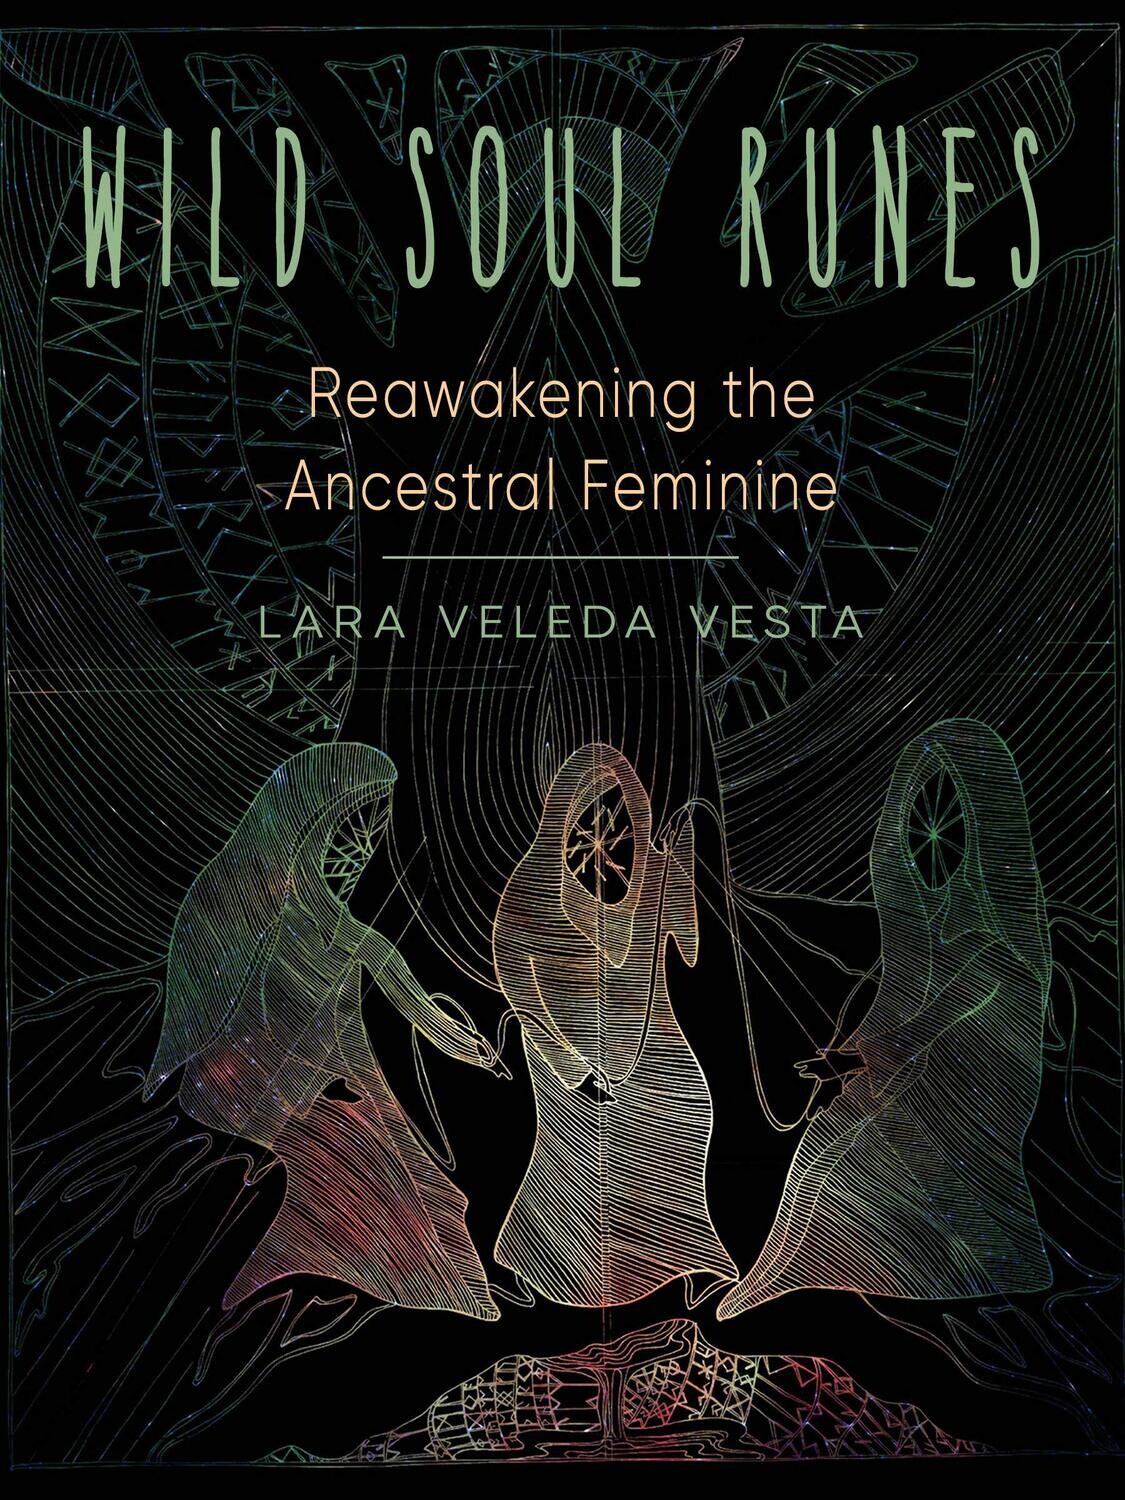 Wild Soul Runes - Reawakening the Ancestral Feminine